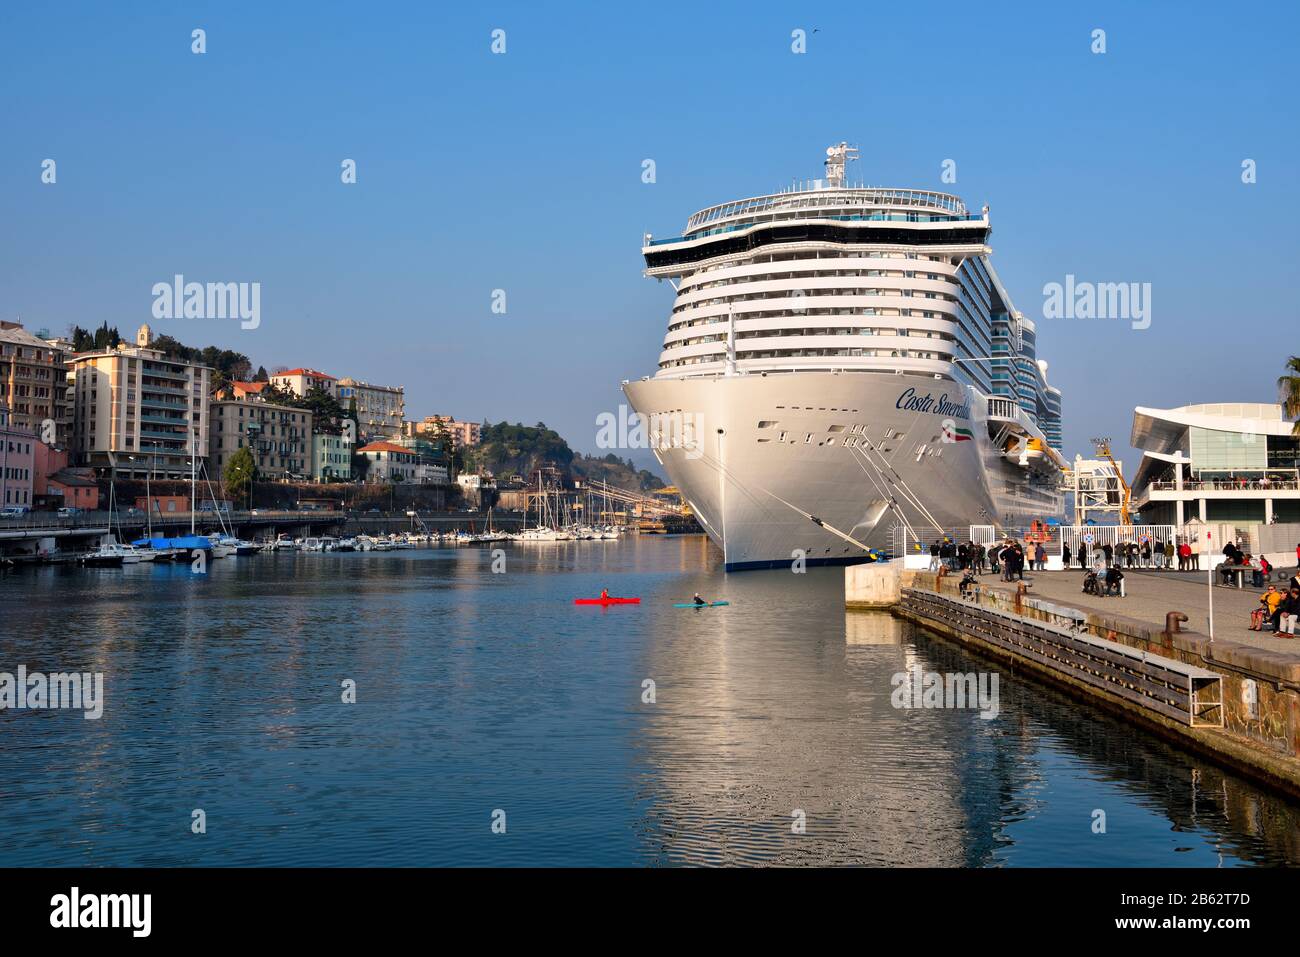 christening of the cruise ship costa smeralda godmother Penelope Cruz Feb 23 2020 Savona Italy Stock Photo